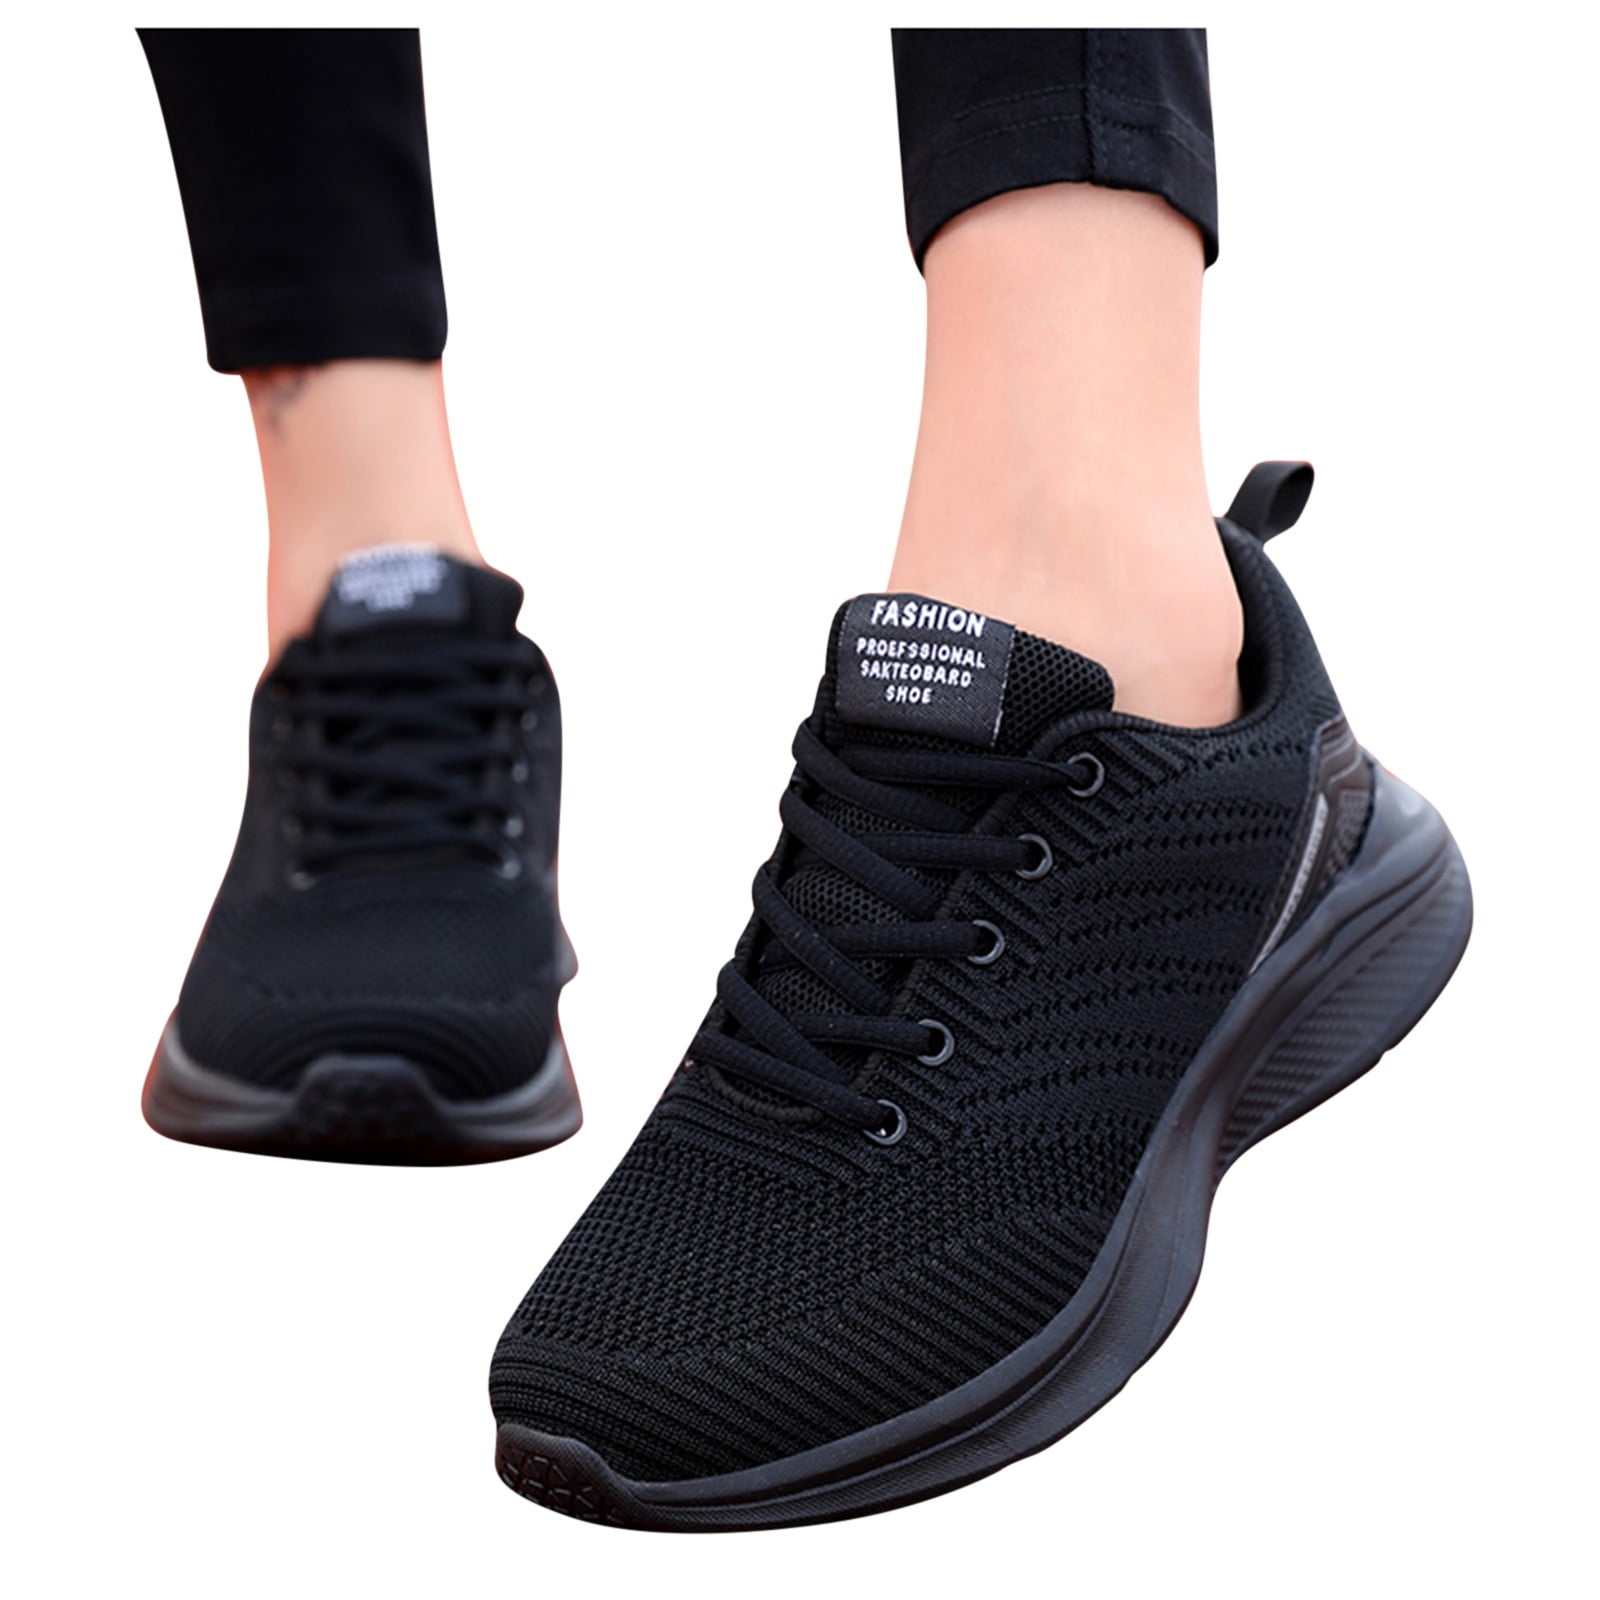 Daznico Women's Walking Shoes Tennis Sneakers Casual Lace Up ...